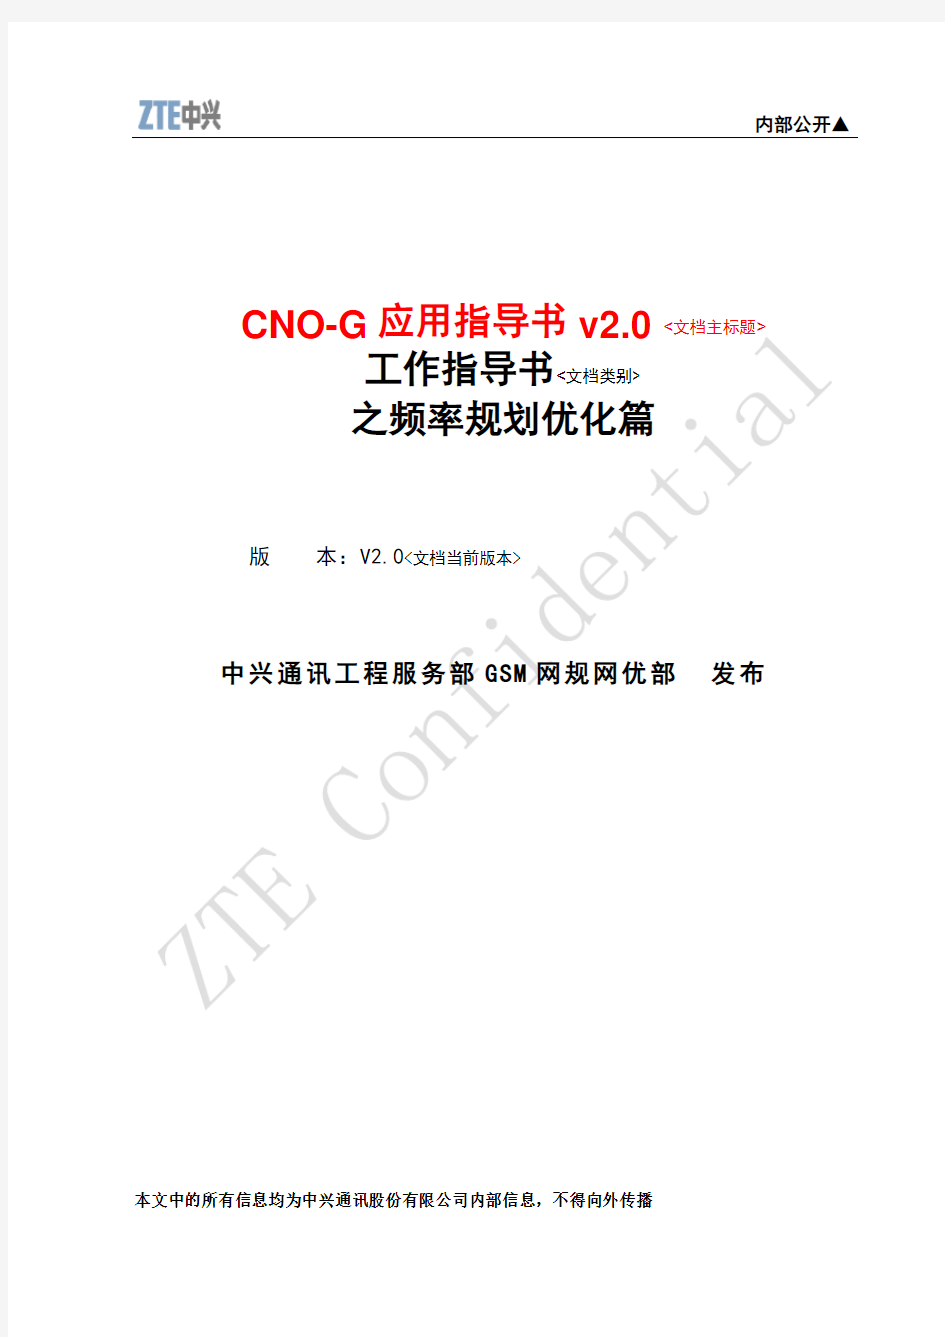 CNO-G应用指导书V2.0之频率规划优化篇